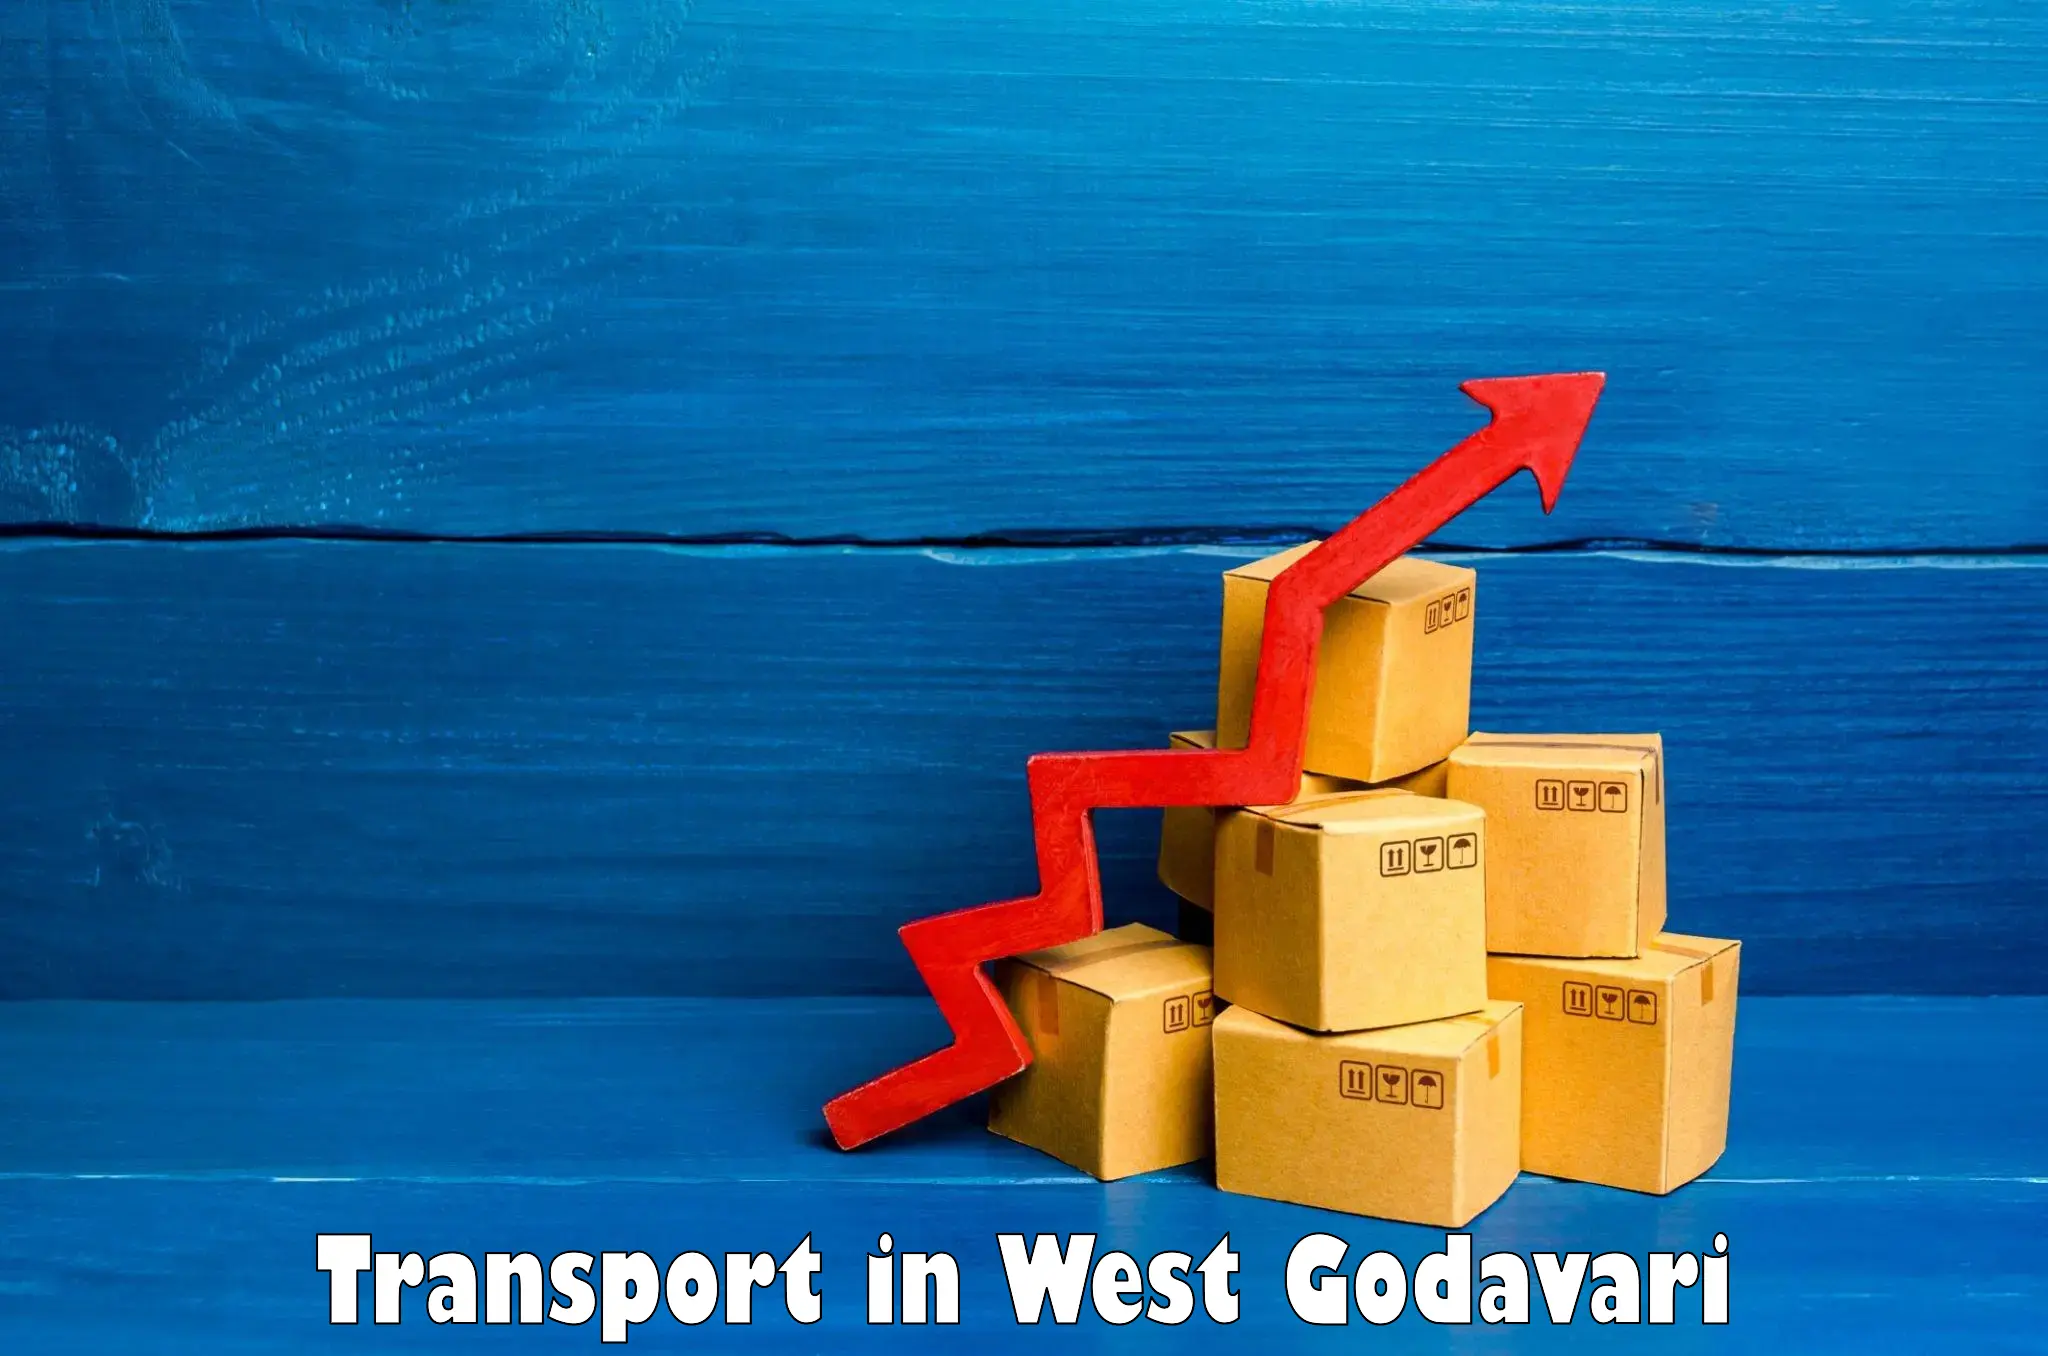 Daily transport service in West Godavari